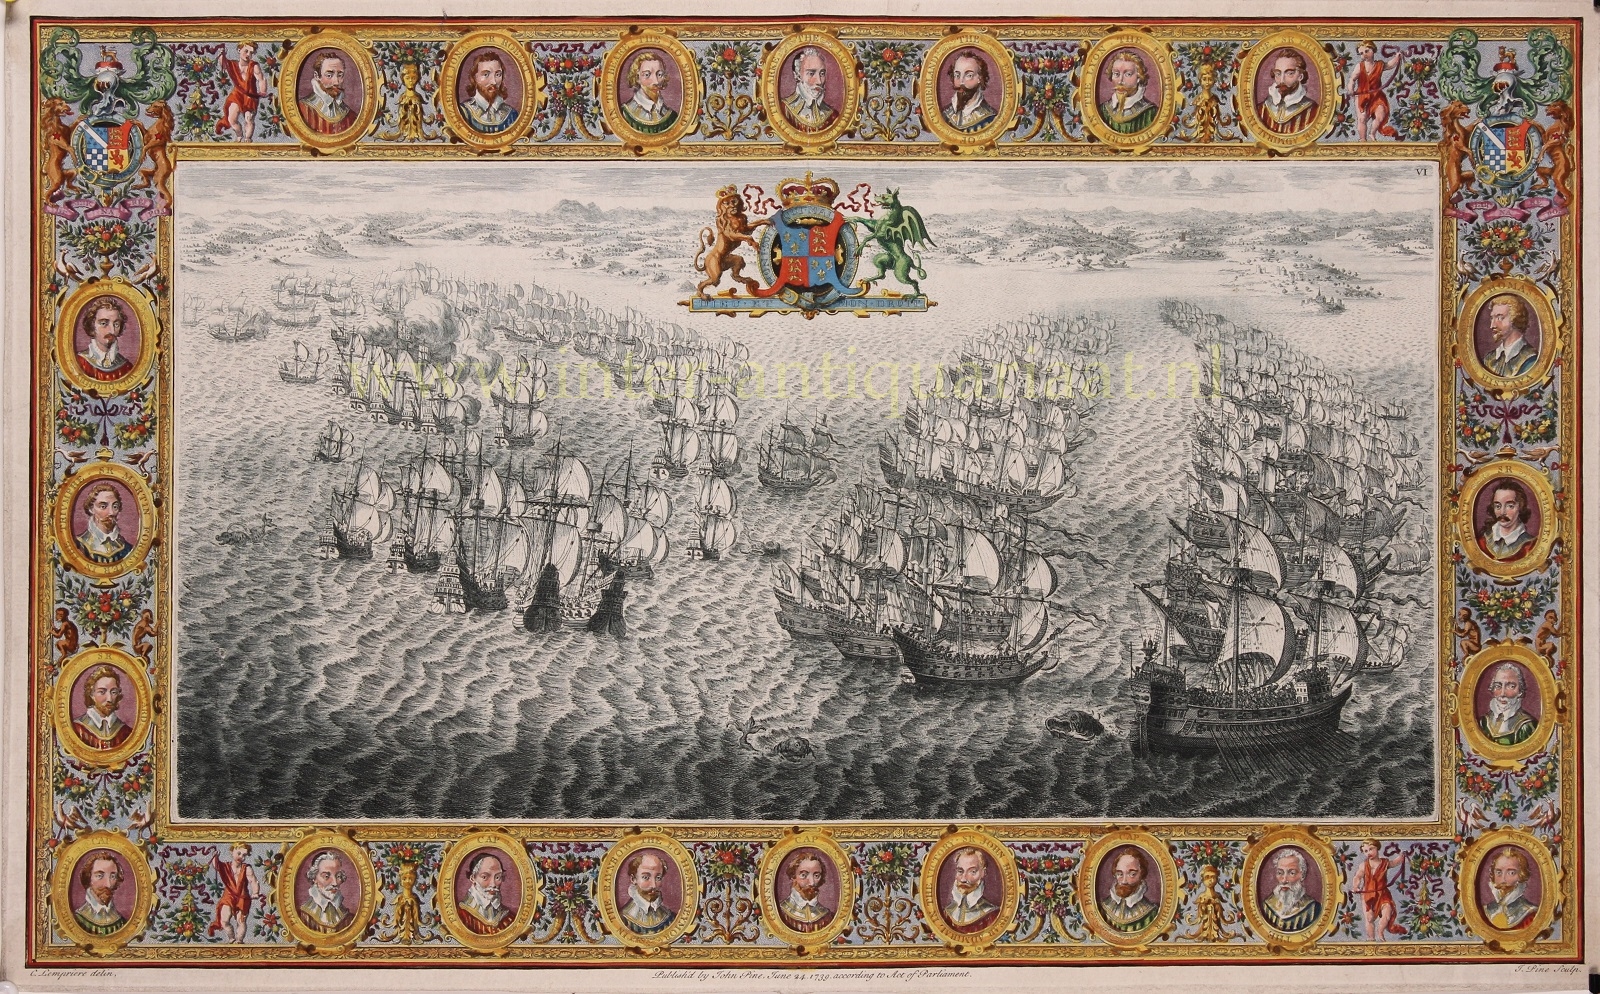  - Spanish armada defeat - John Pine, 1736